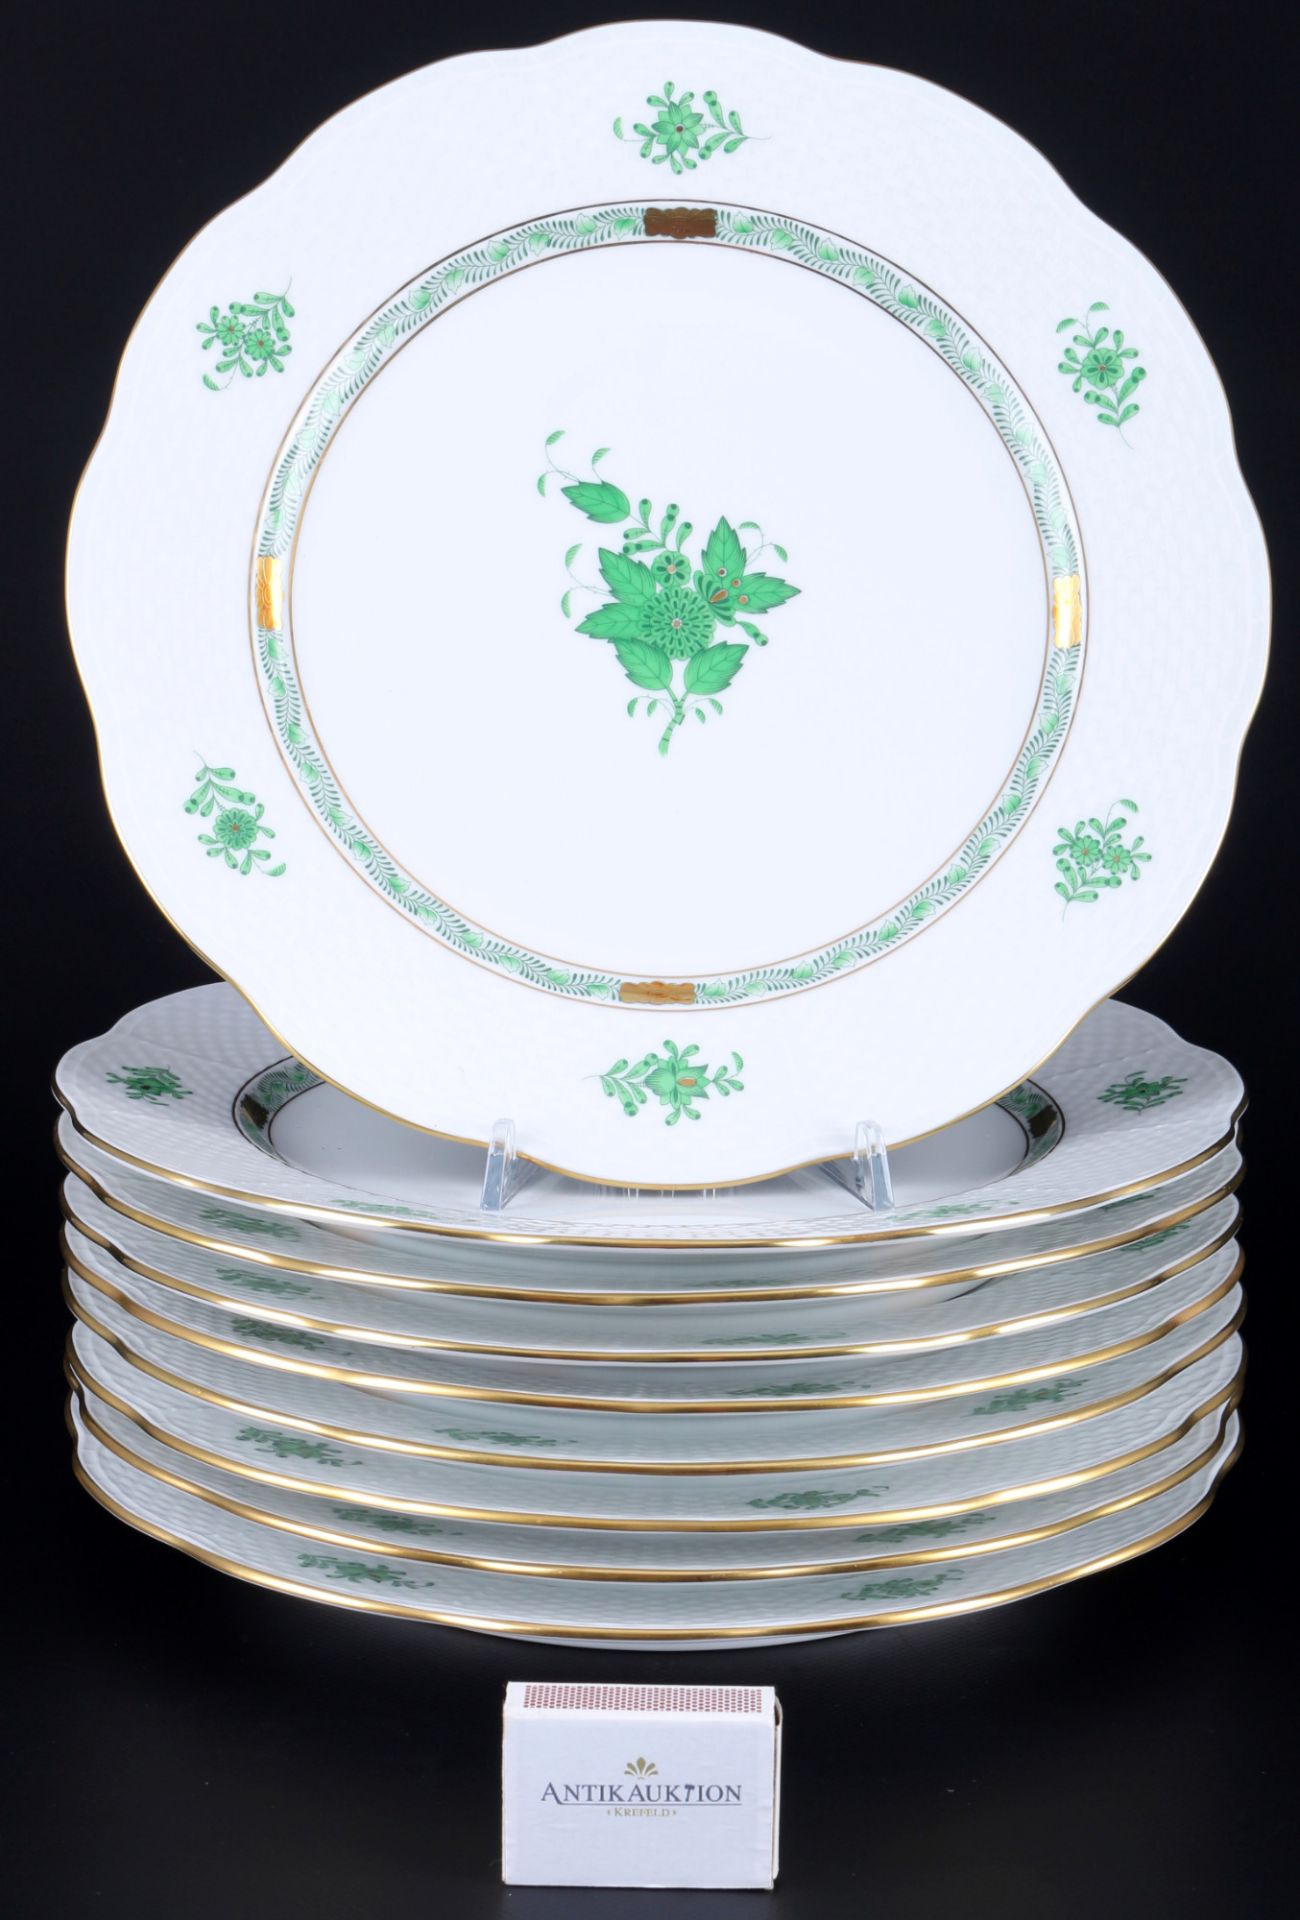 Herend Apponyi Vert 9 große Platzteller, large charger plates,